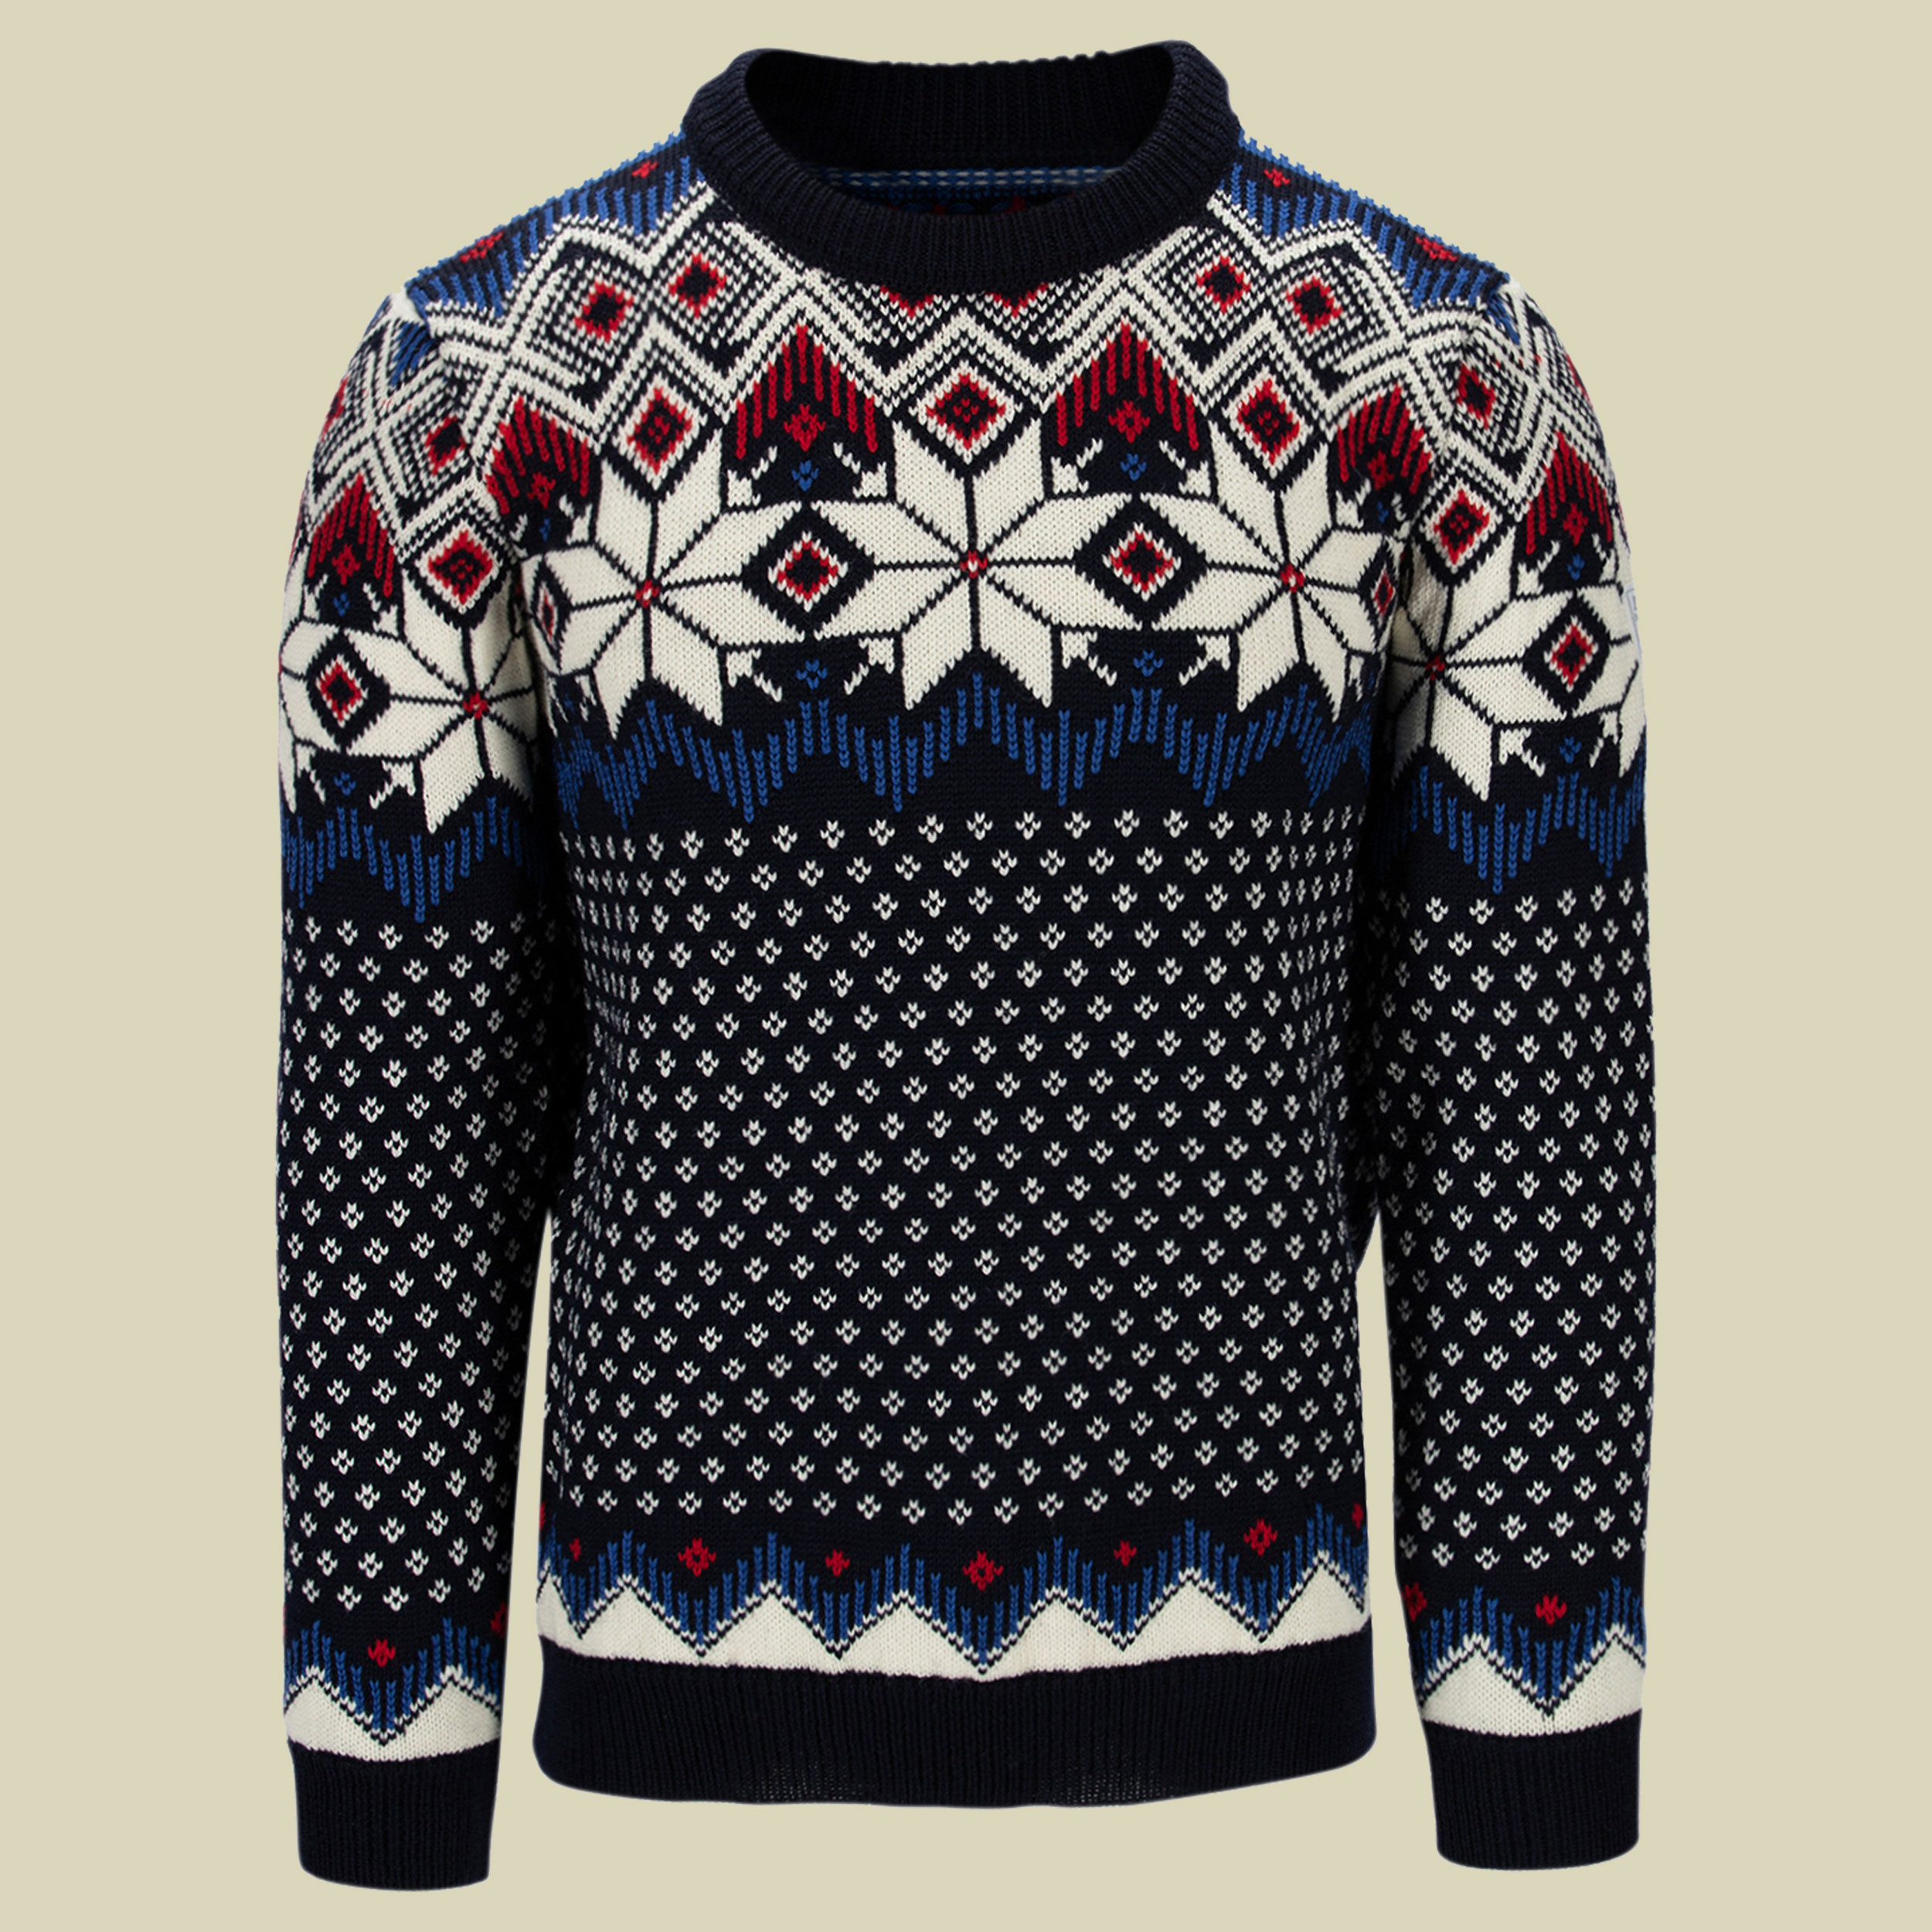 Vegard Sweater Men Größe S Farbe navy-off white-ultramarin-raspberry